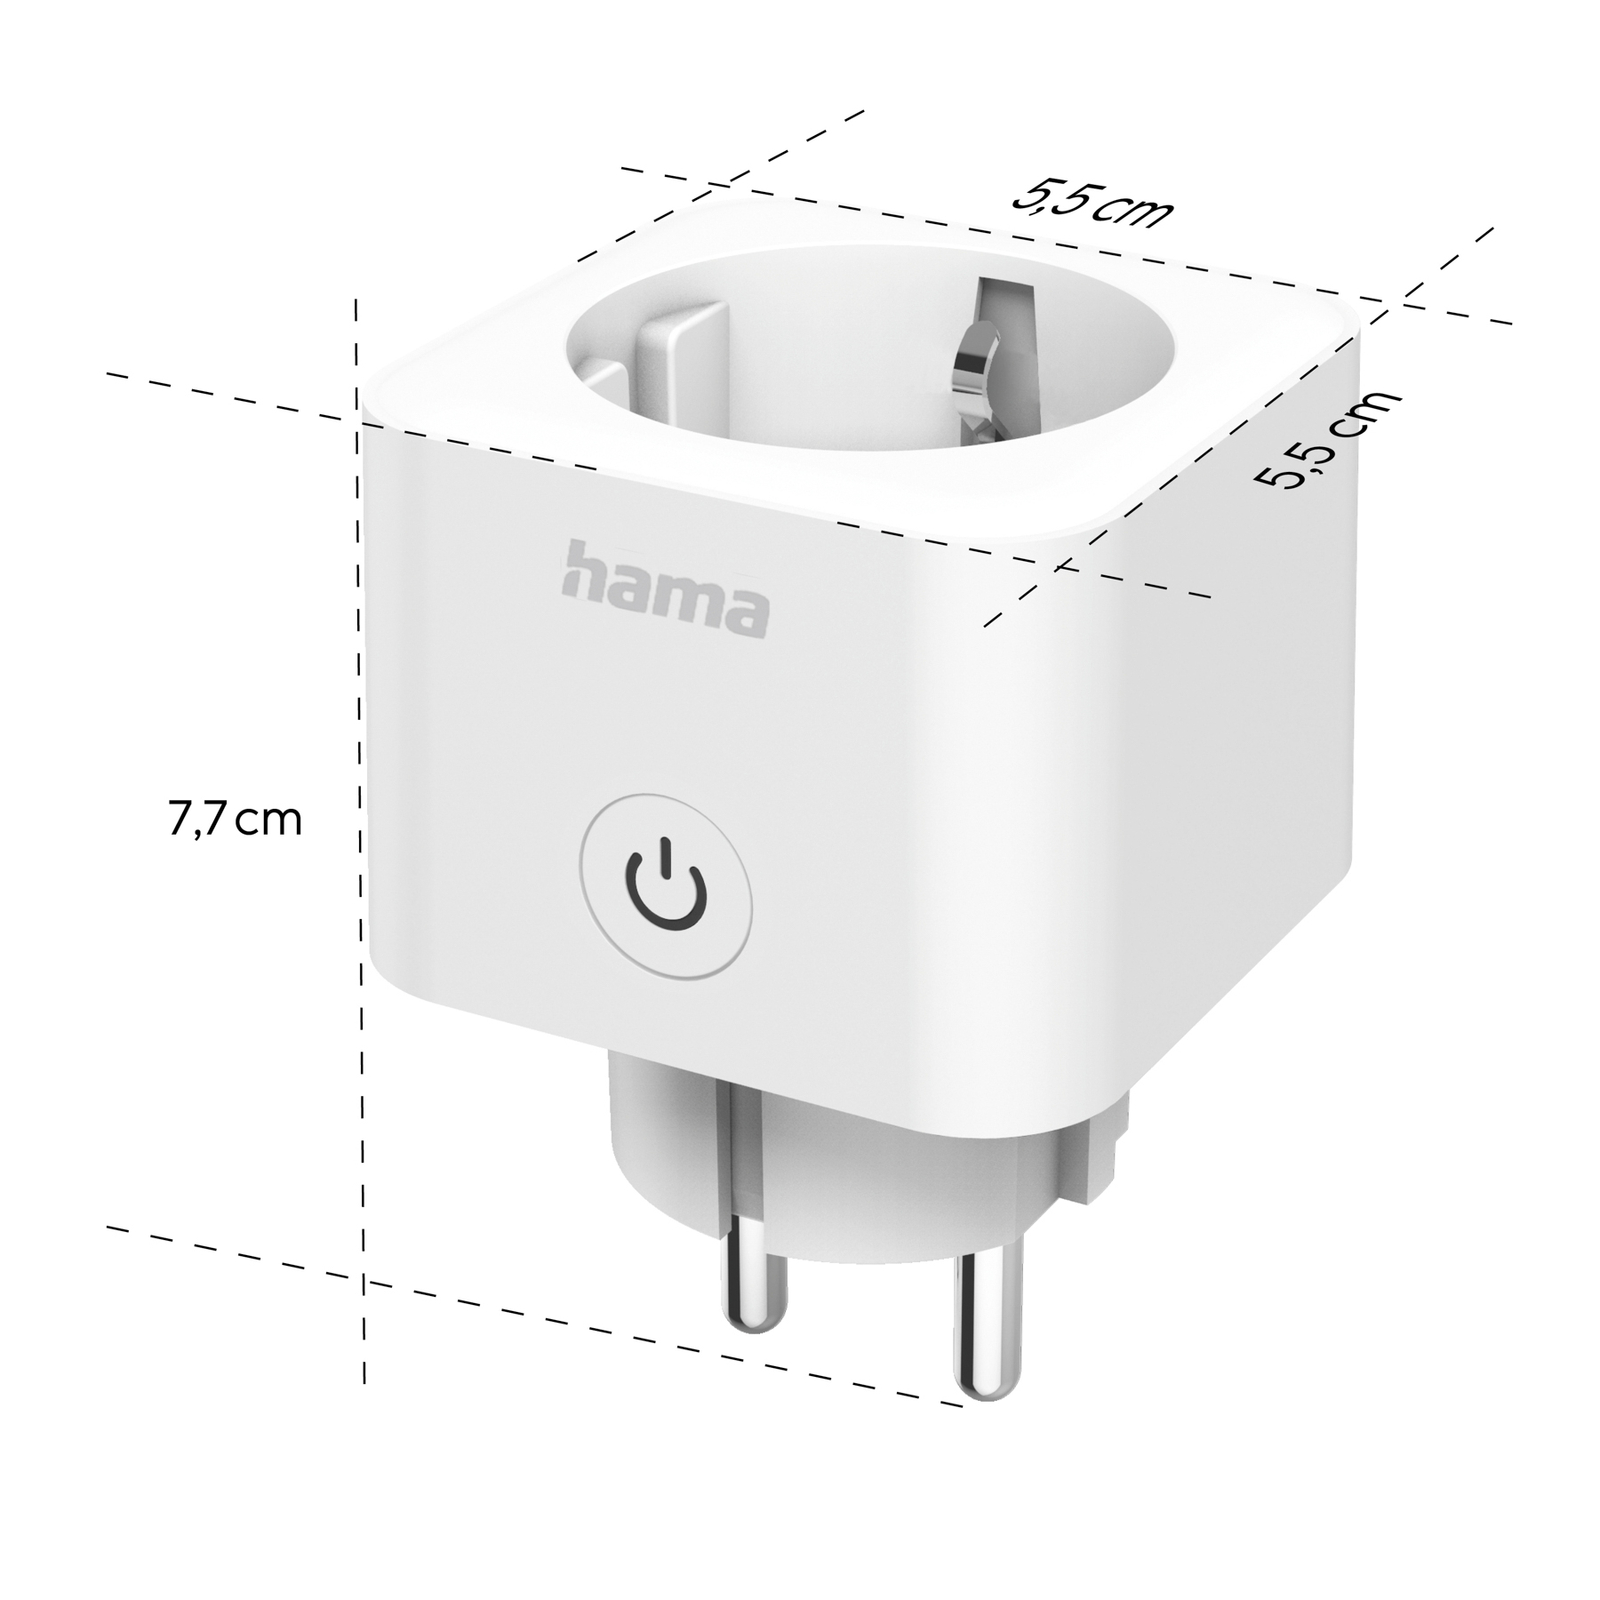 Hama WLAN-Steckdose Smart, Matter-fähig, weiß, 3.680 W